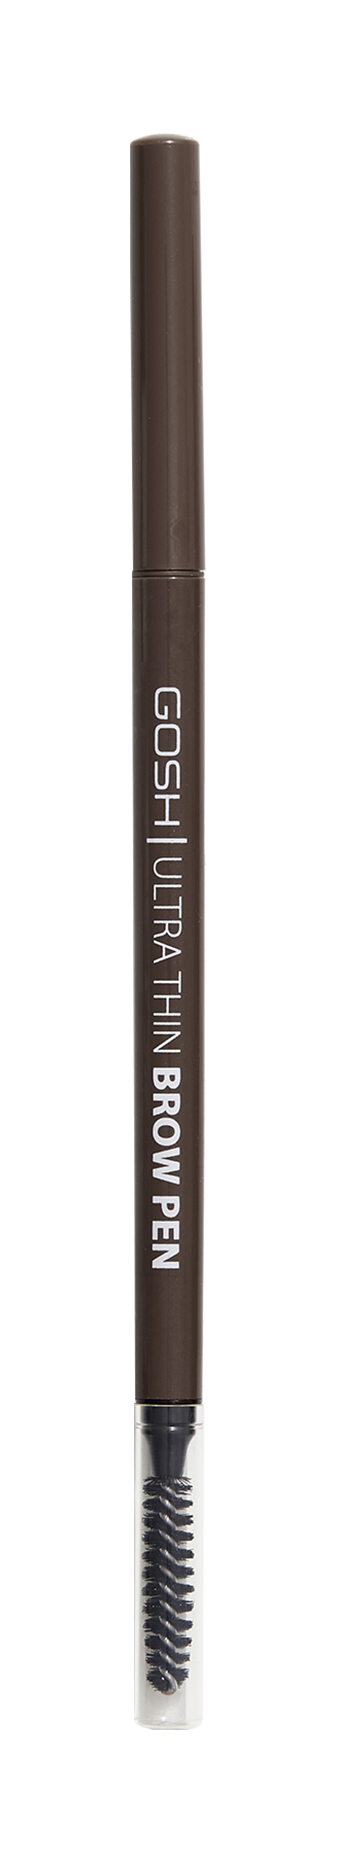 Карандаш для бровей Gosh Ultra Thin Brow Pen темно-коричневый карандаш для бровей gosh ultra thin brow pen коричневый